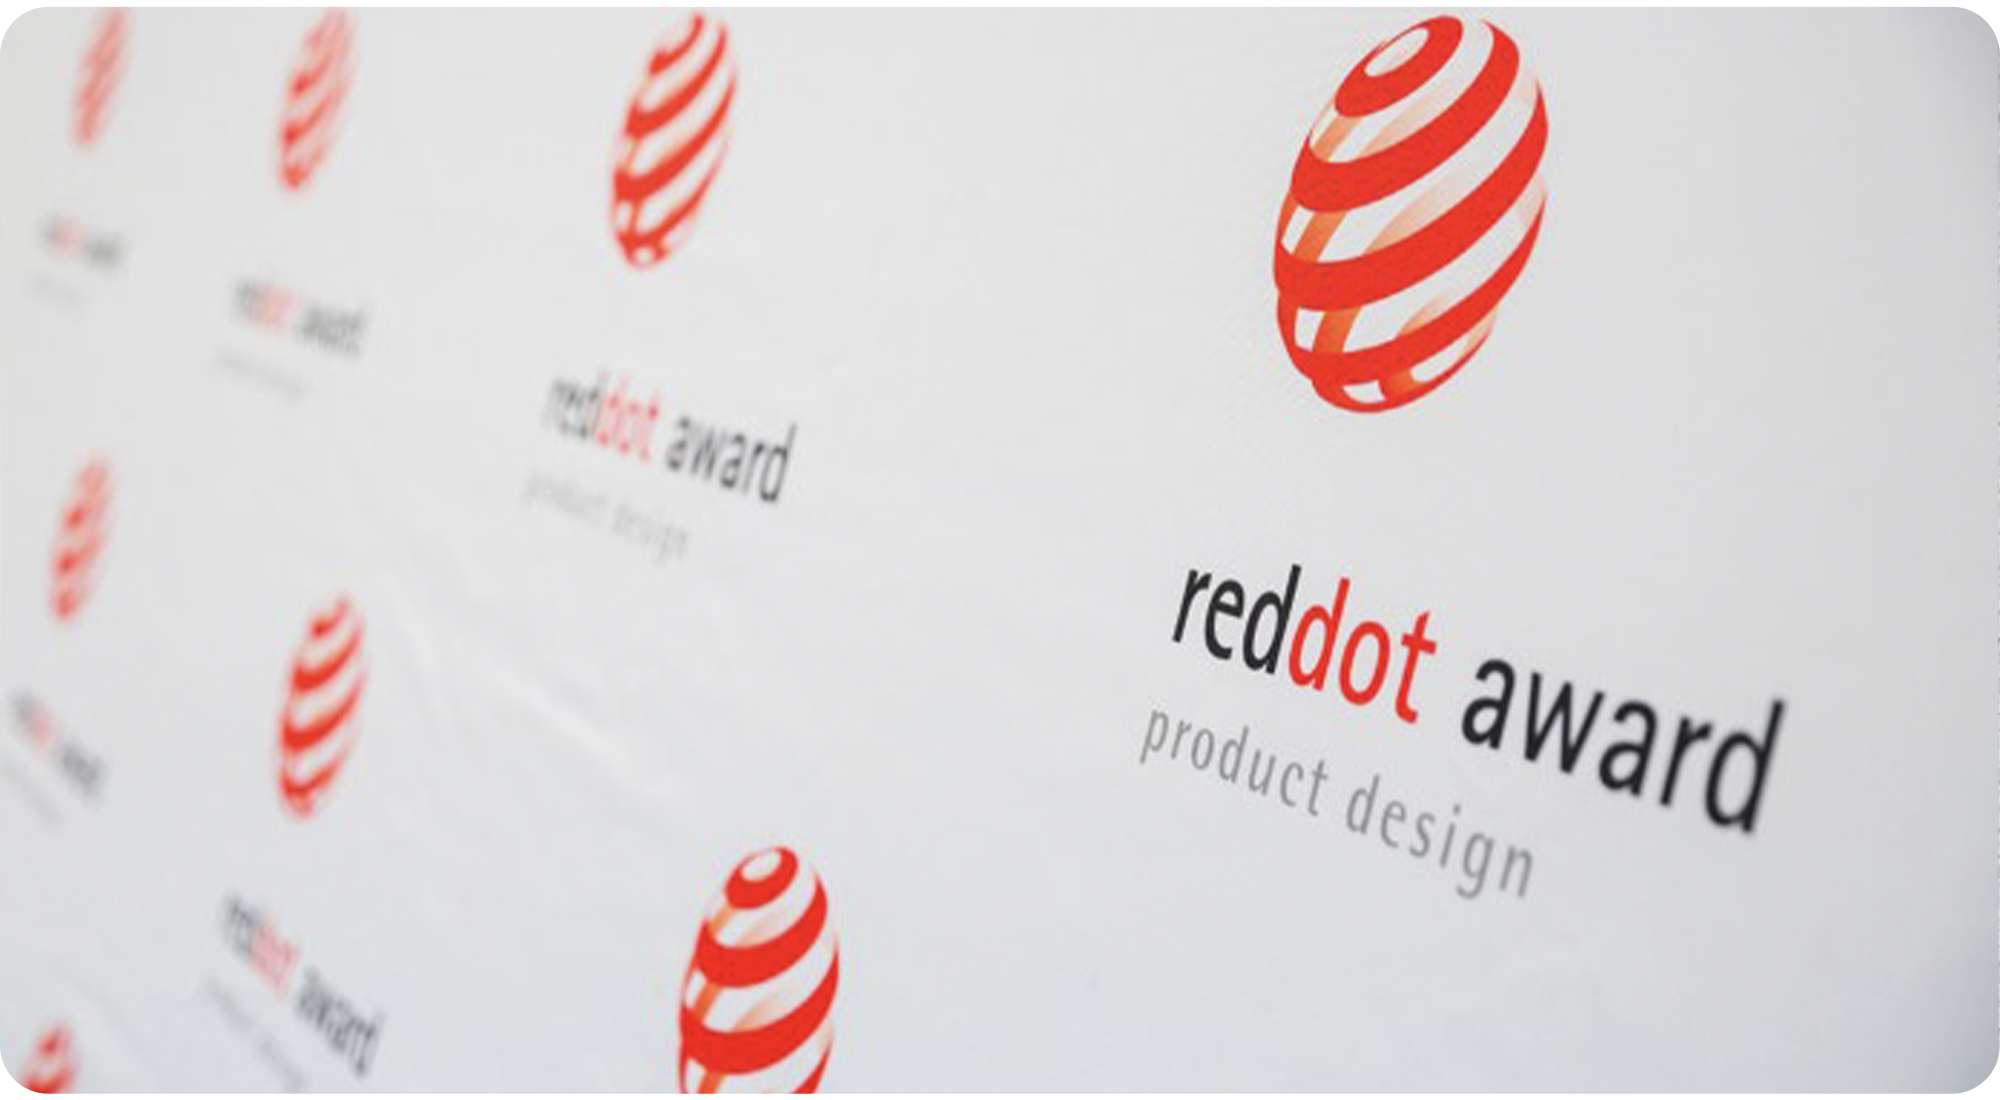 NOERDEN: LIZ wins Red Dot Product Design Award 2020!